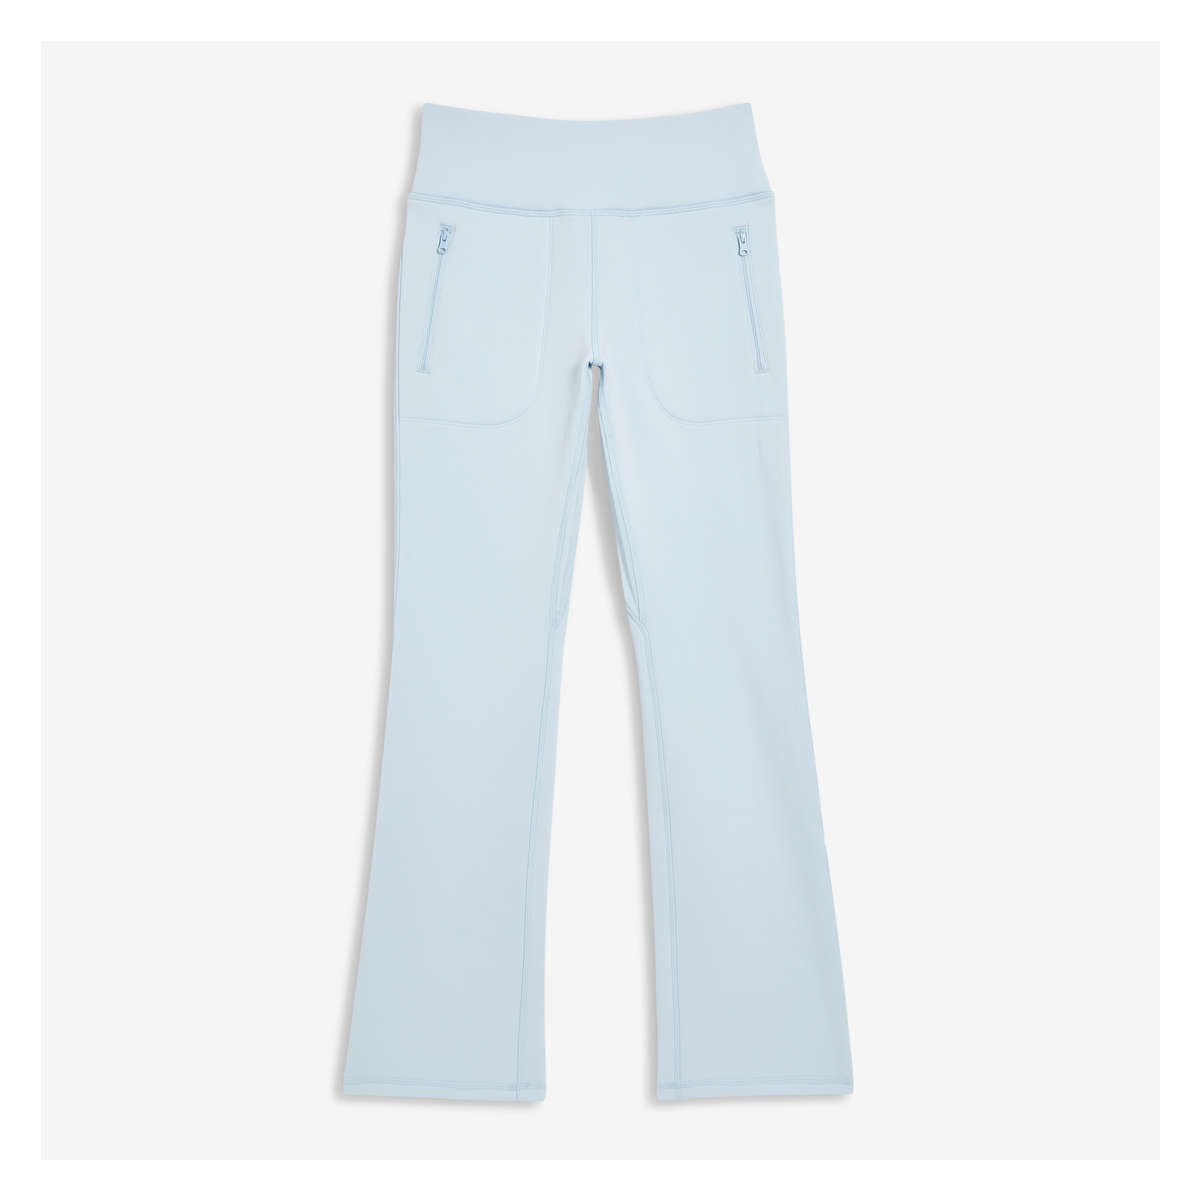 Cambridge Dry Goods Fleece-Lined Pants - Save 54%